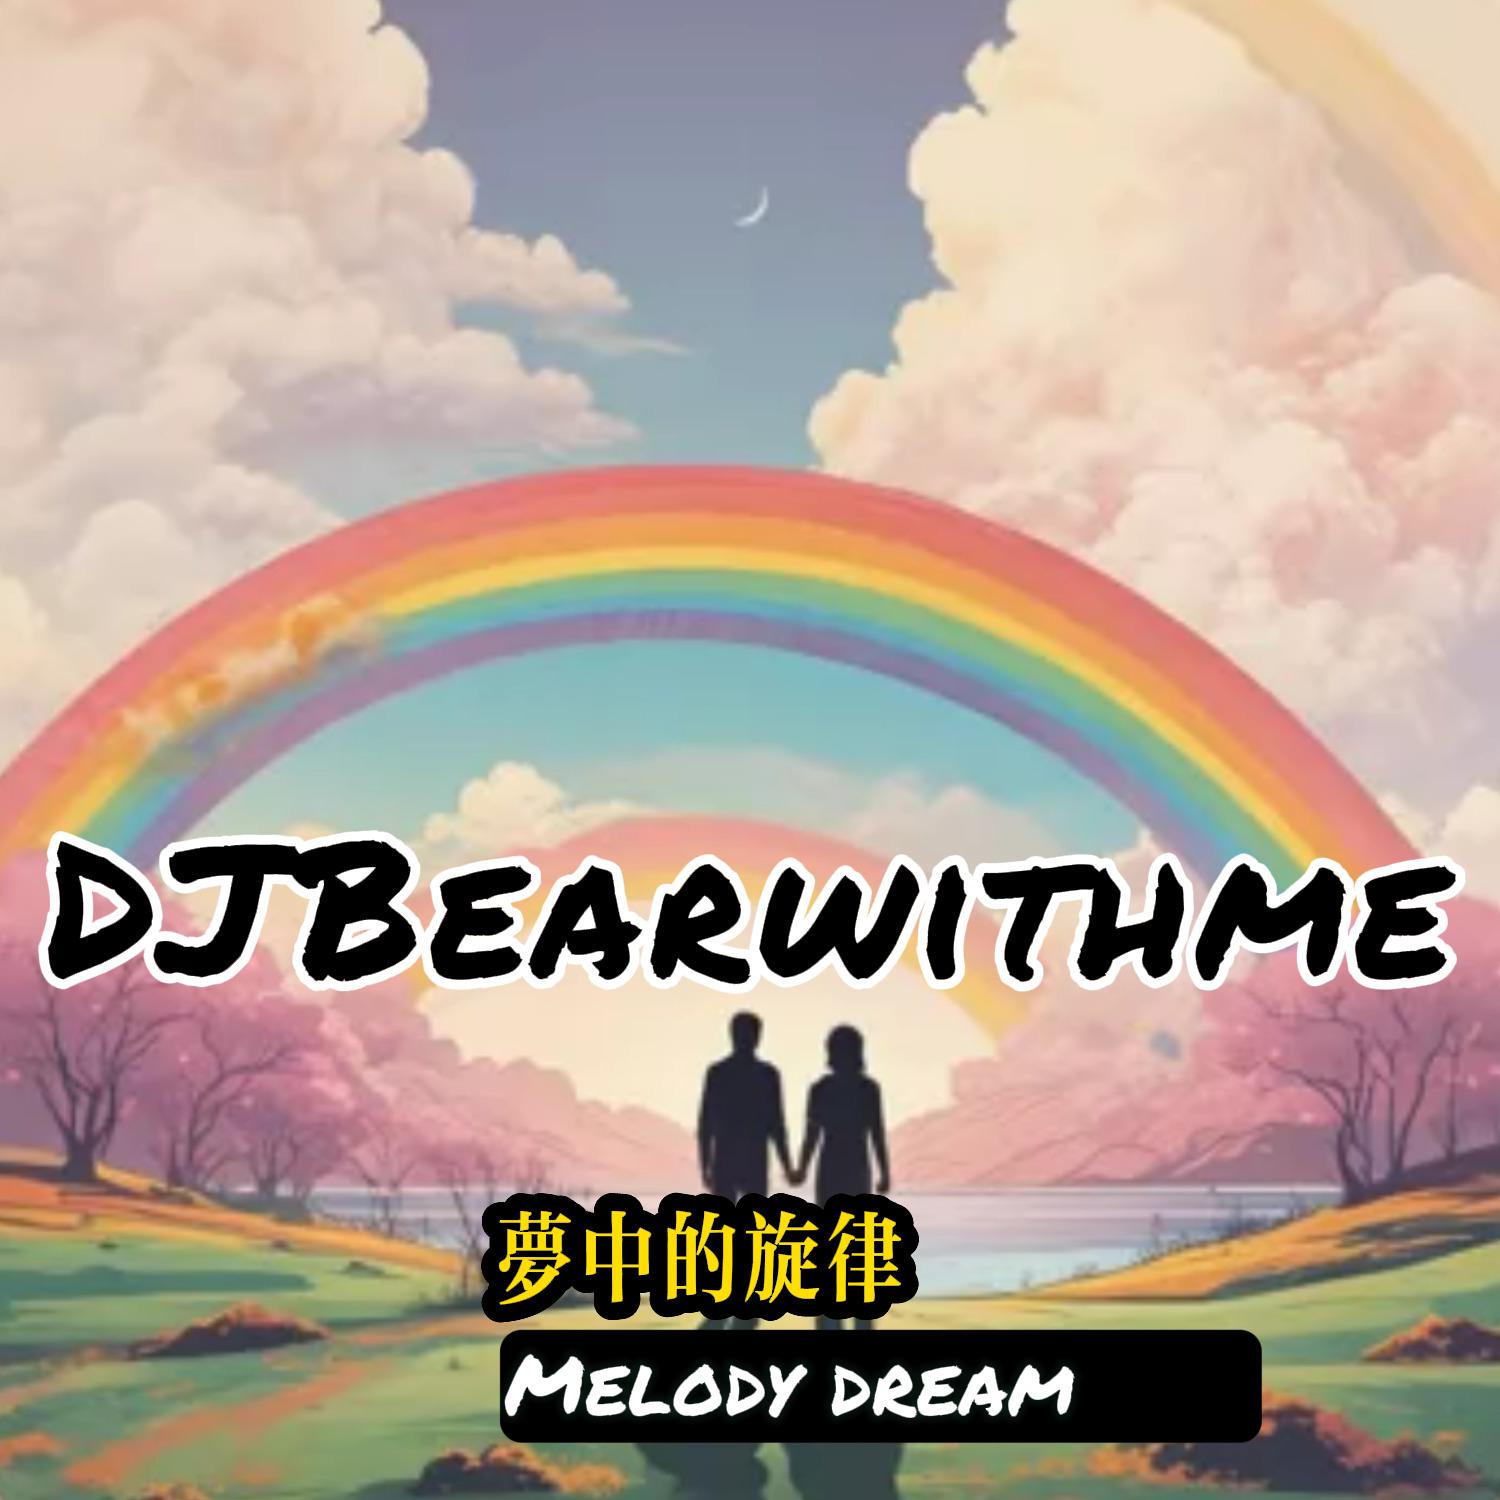 DJBearwithme - 梦中的旋律 Melody dream (live) 伴奏